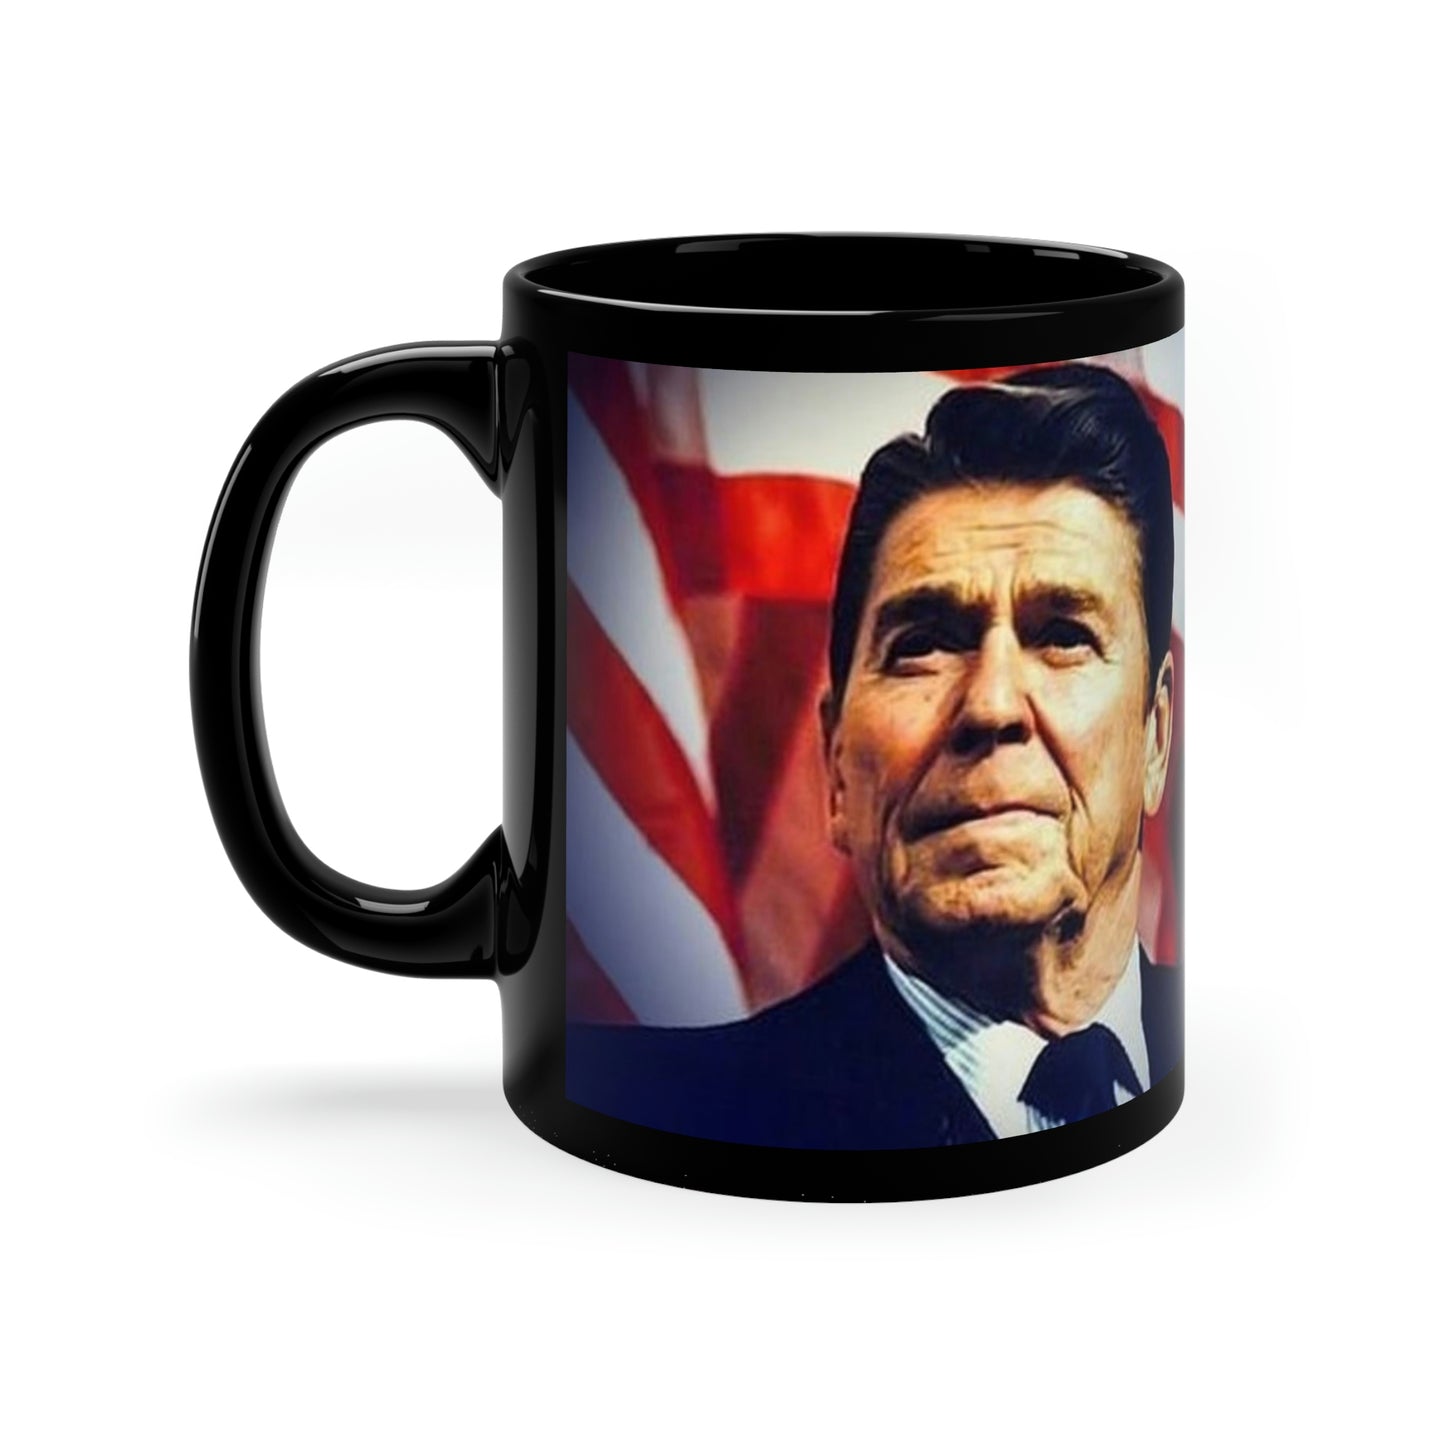 Ronald Reagan Drain The Swamp Quote 11oz Black Mug